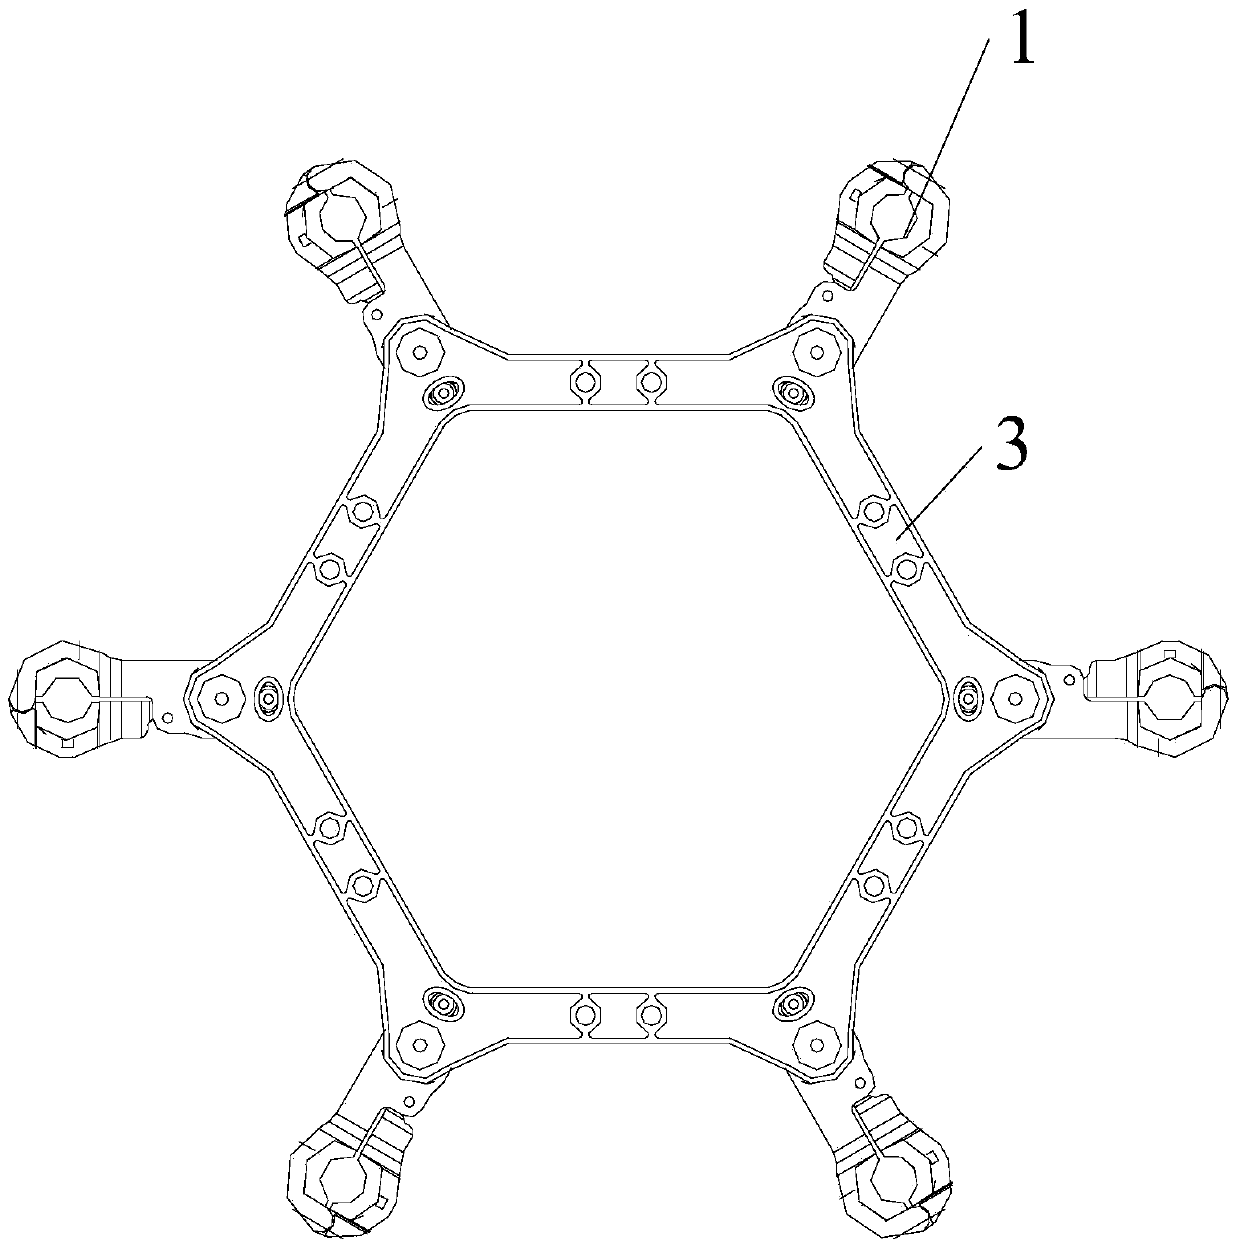 A damping connection type multi-split wire spoiler dance preventer